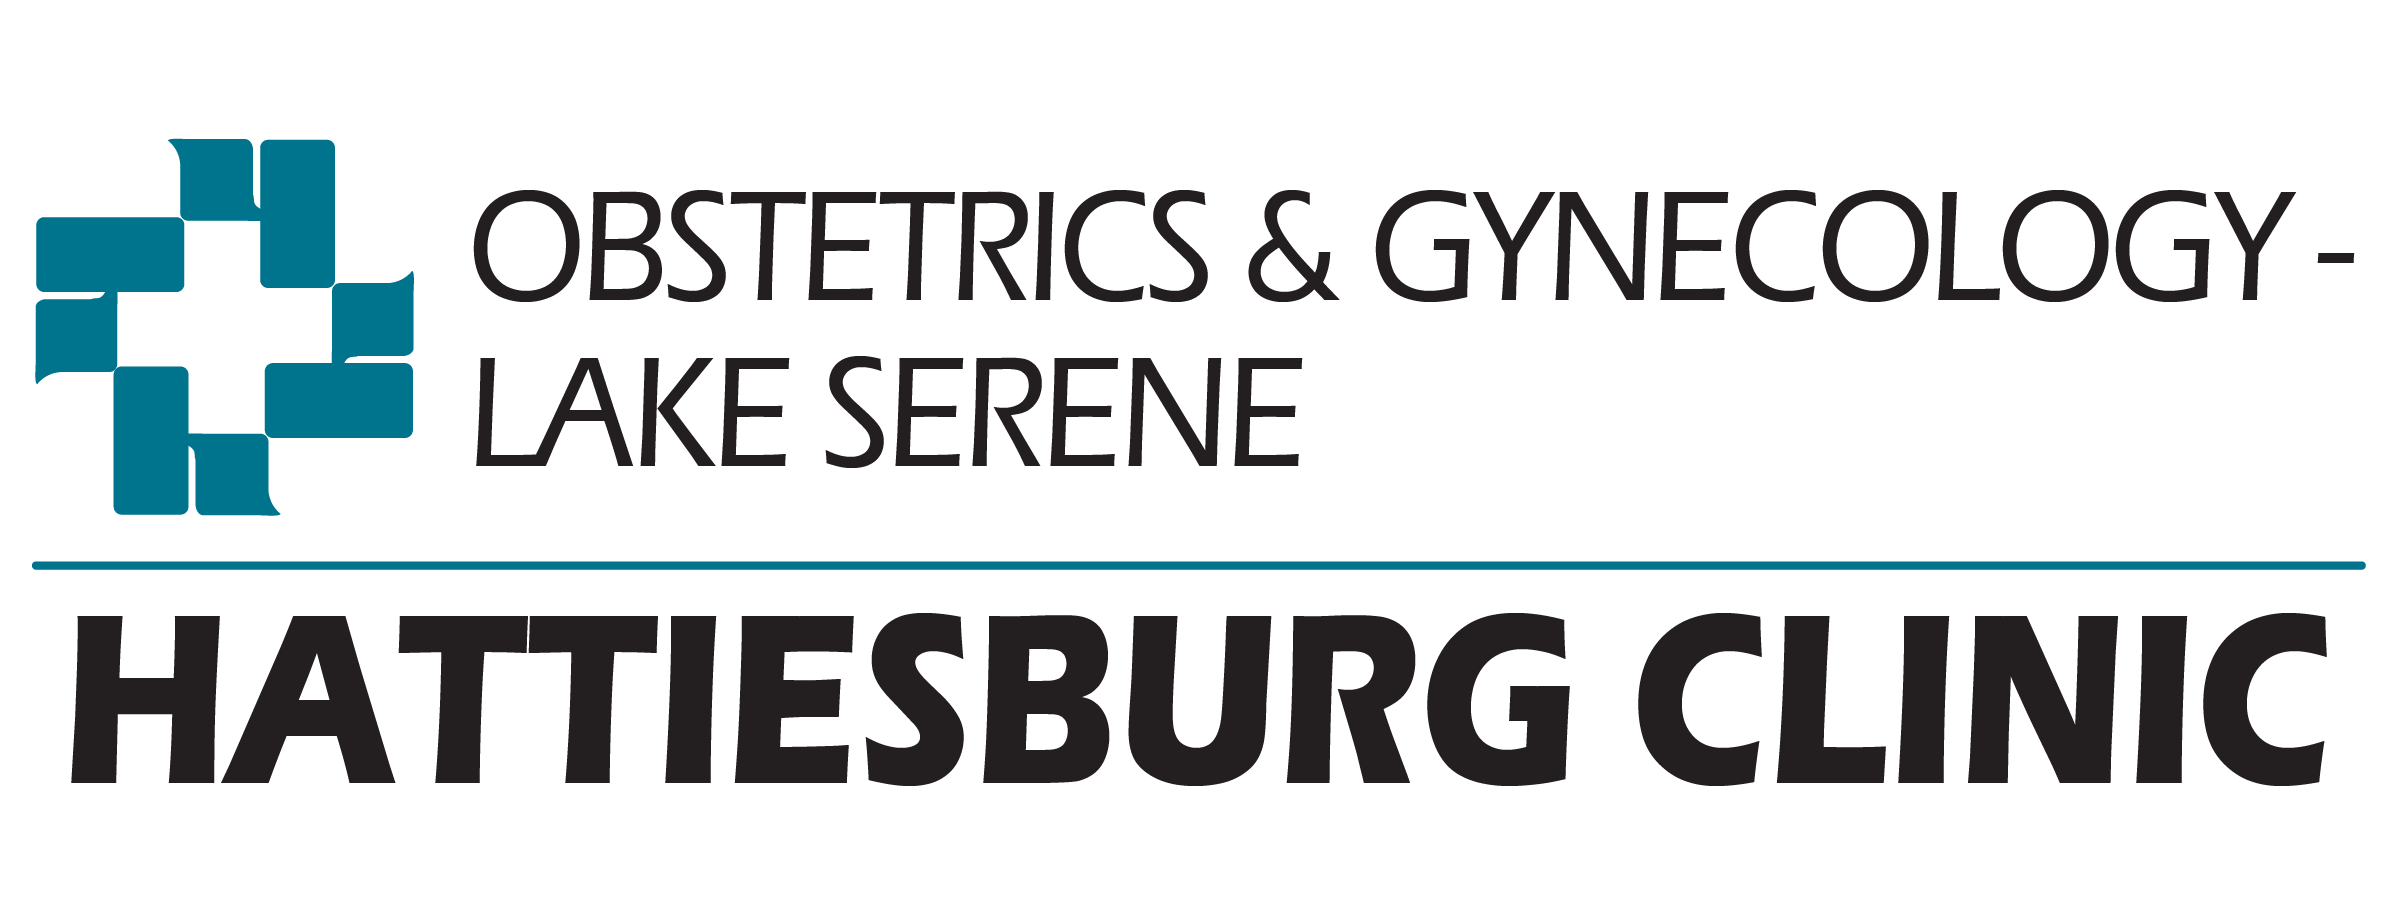 Obstetrics & Gynecology - Lake Serene logo